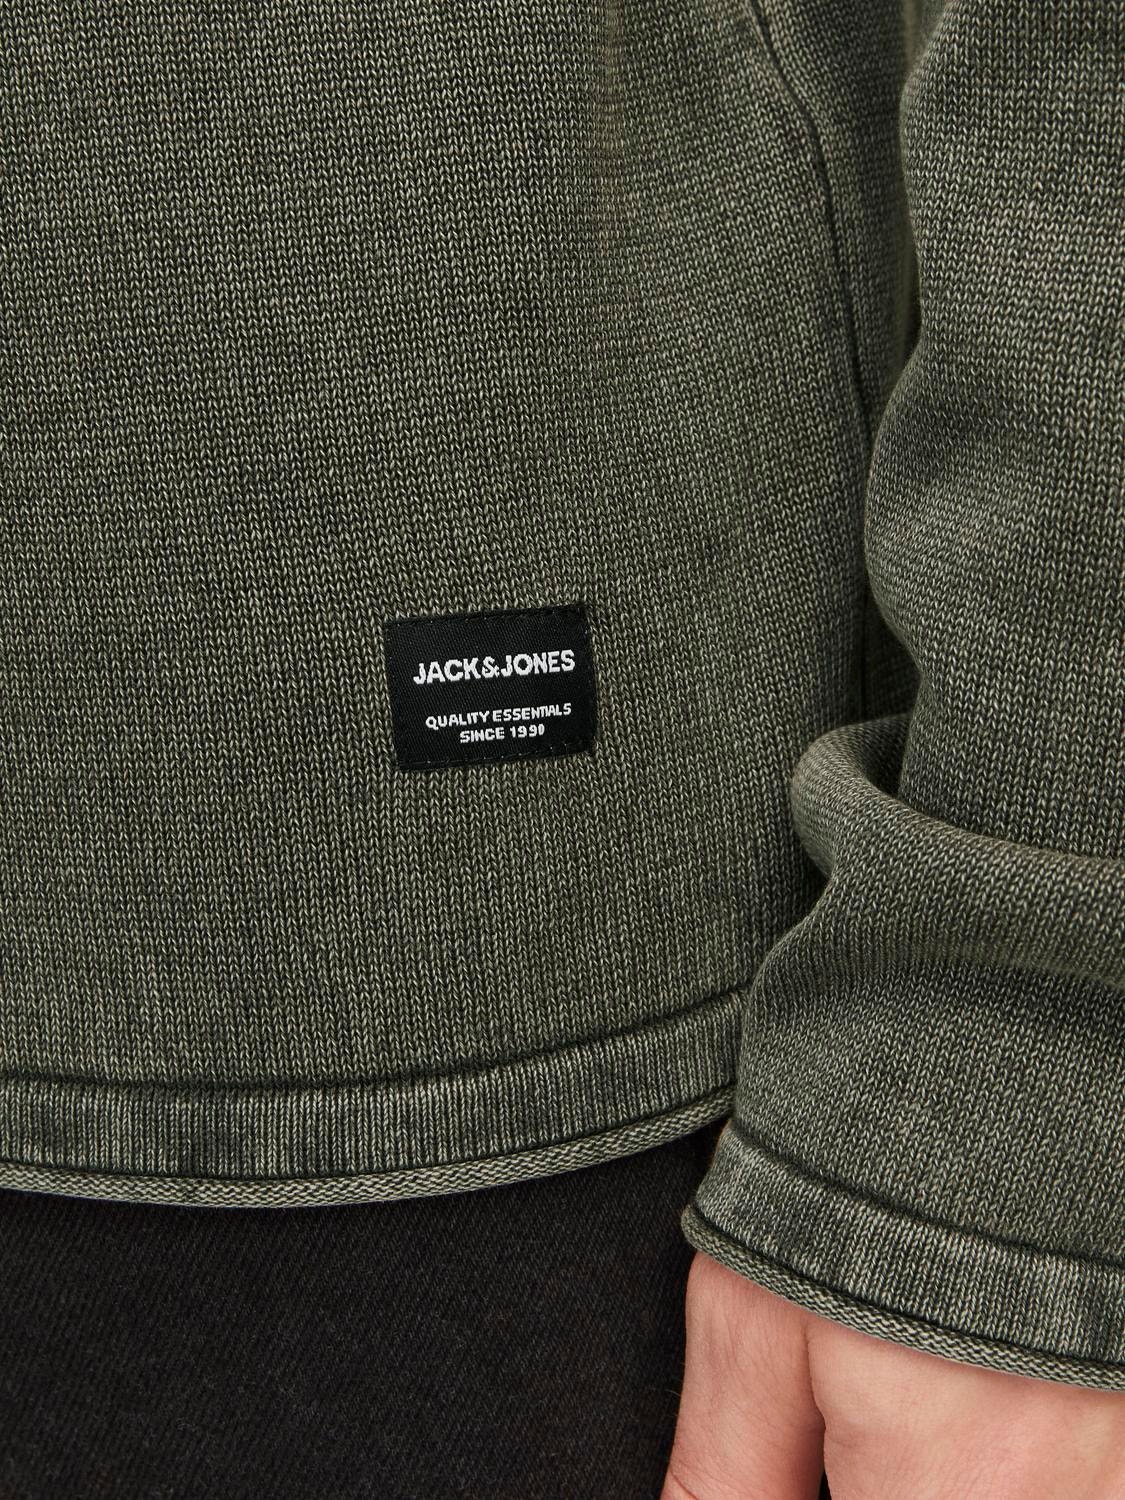 Jack & Jones Plain Knitted pullover -Dusty Olive - 12174001